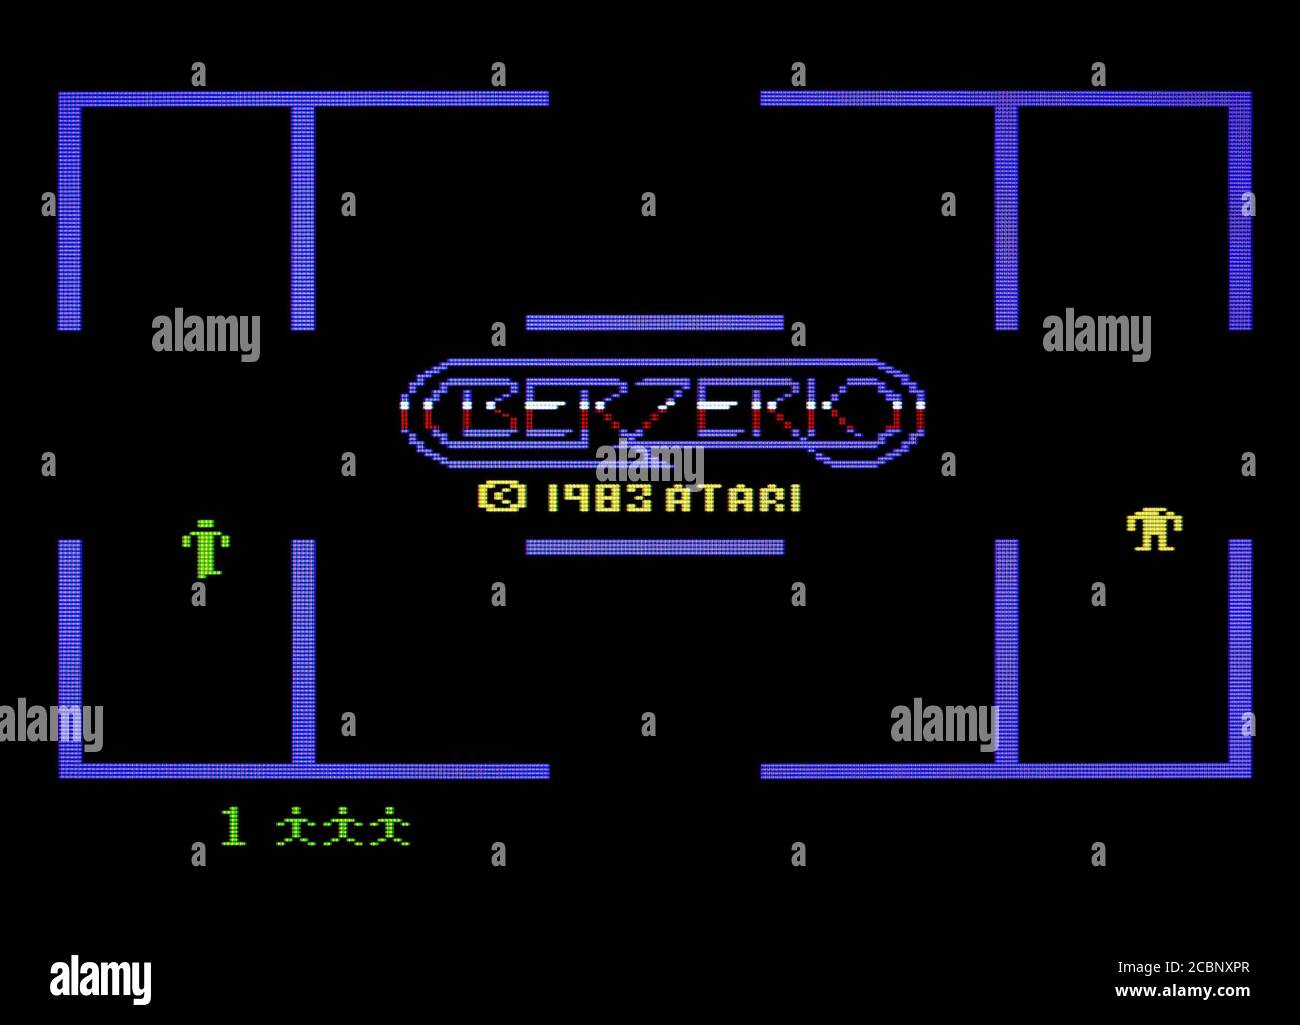 Berzerk - Atari 5200 - editorial use only Stock Photo